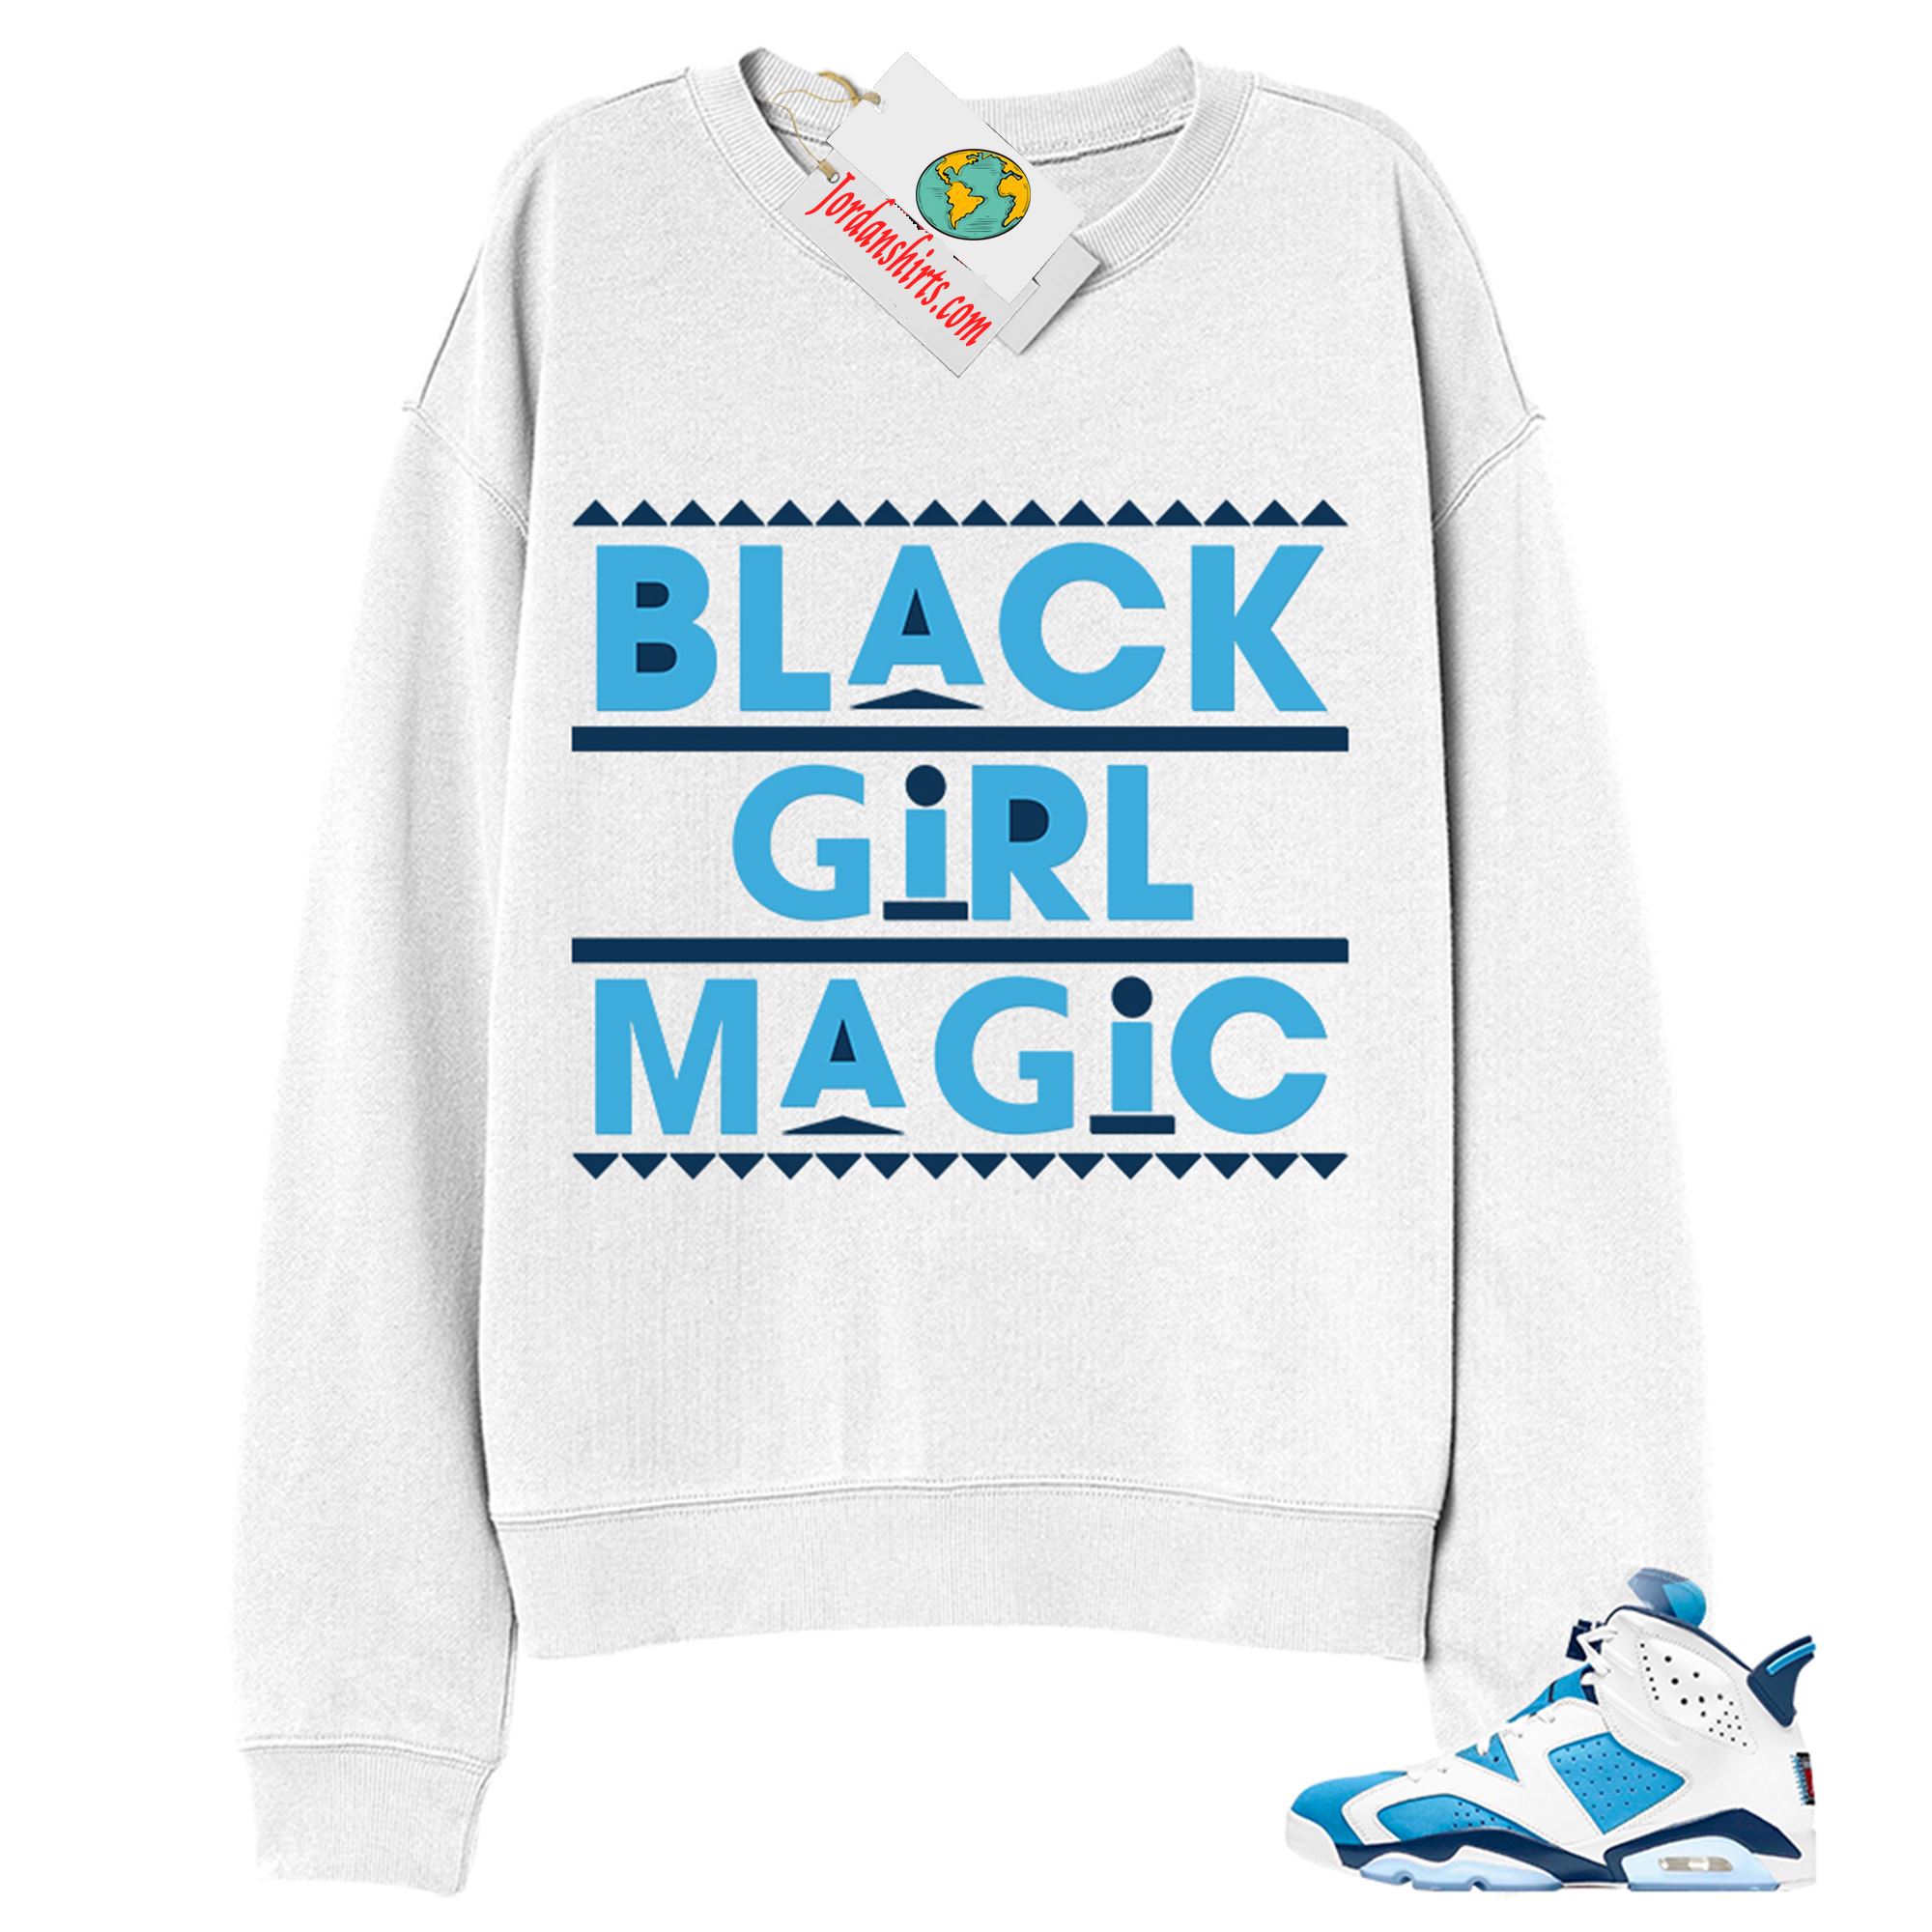 Jordan 6 Sweatshirt, Black Girl Magic White Sweatshirt Air Jordan 6 Unc 6s Size Up To 5xl